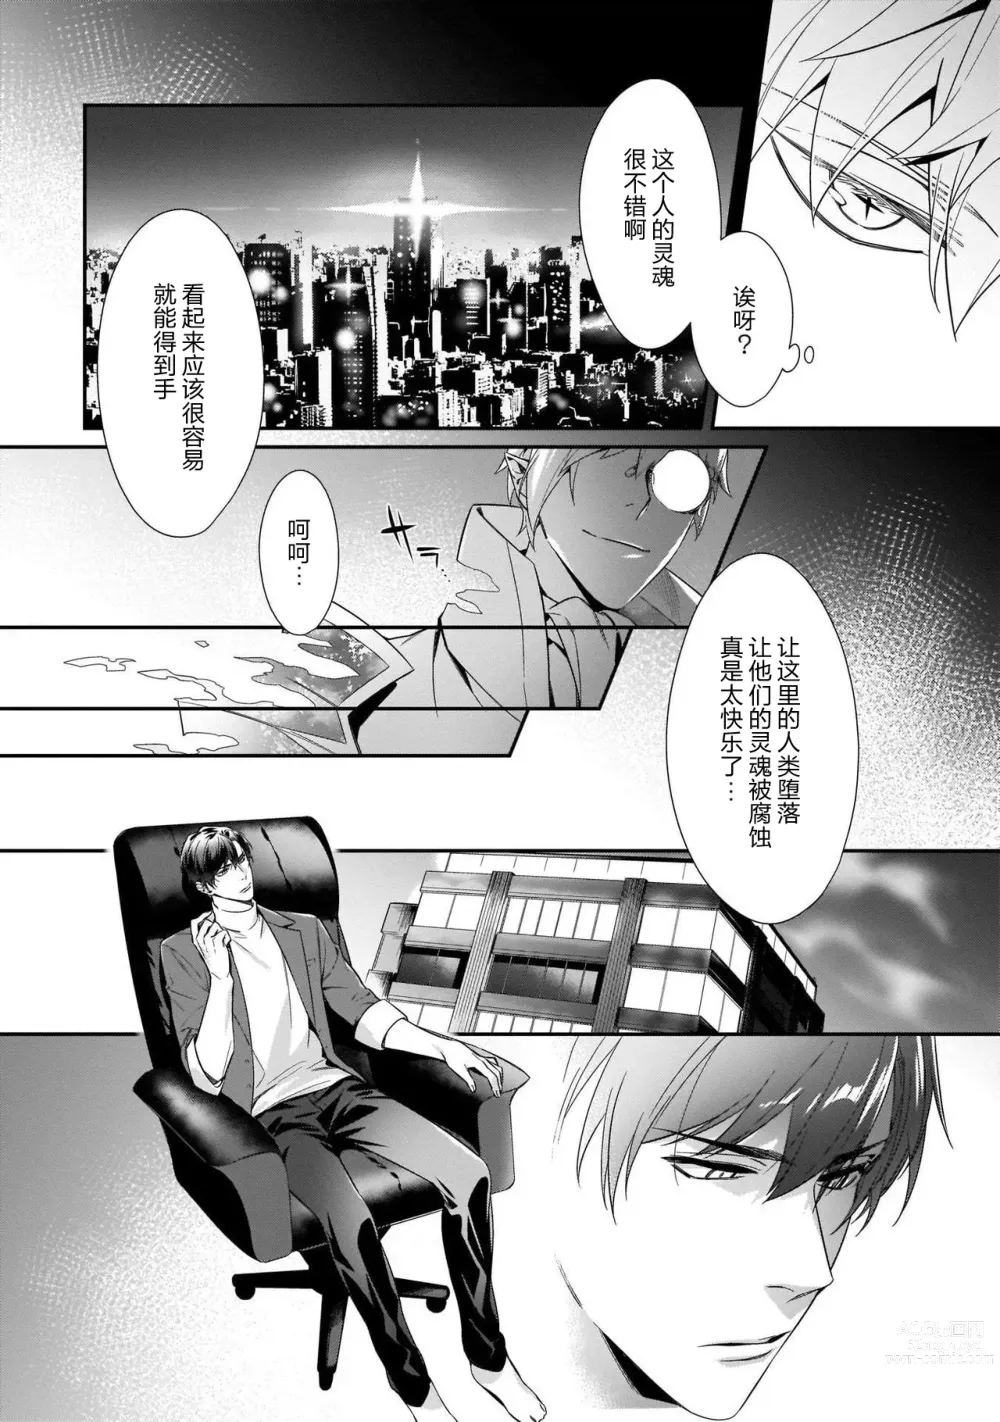 Page 6 of manga Torokeru kaikan sokuochi akuma 1-3